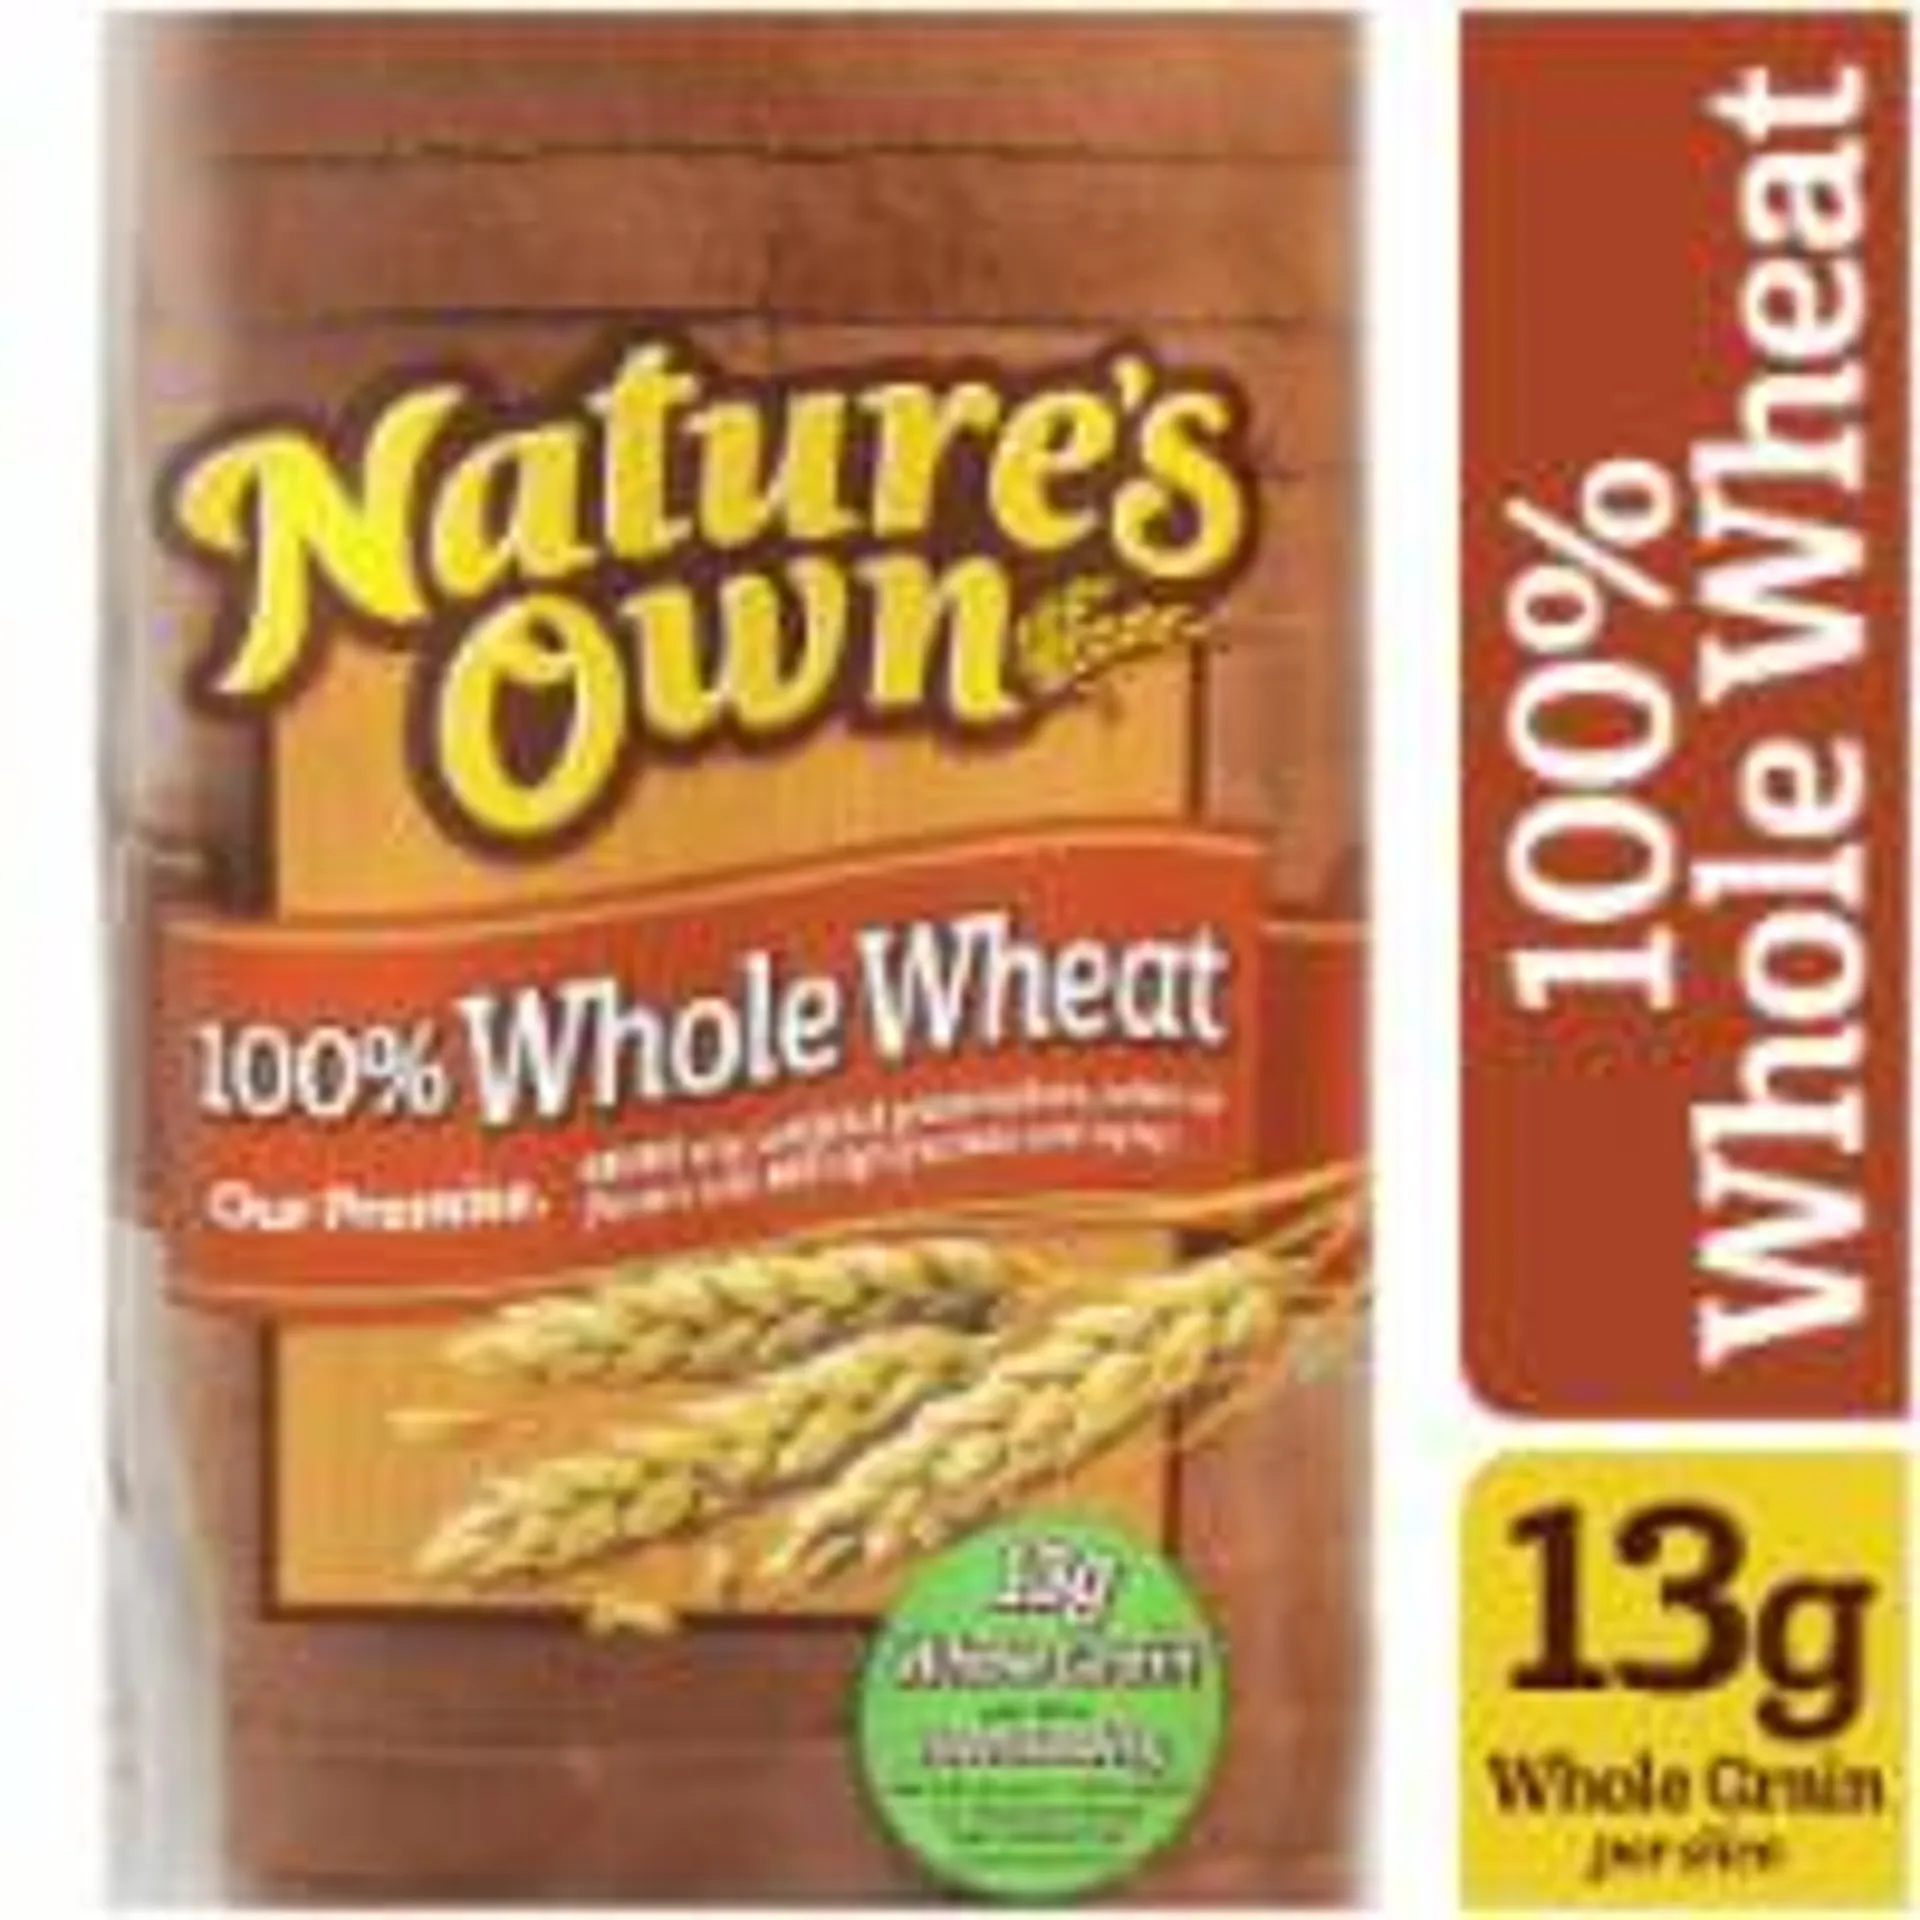 Nature's Own 100% Whole Wheat Whole Wheat Bread